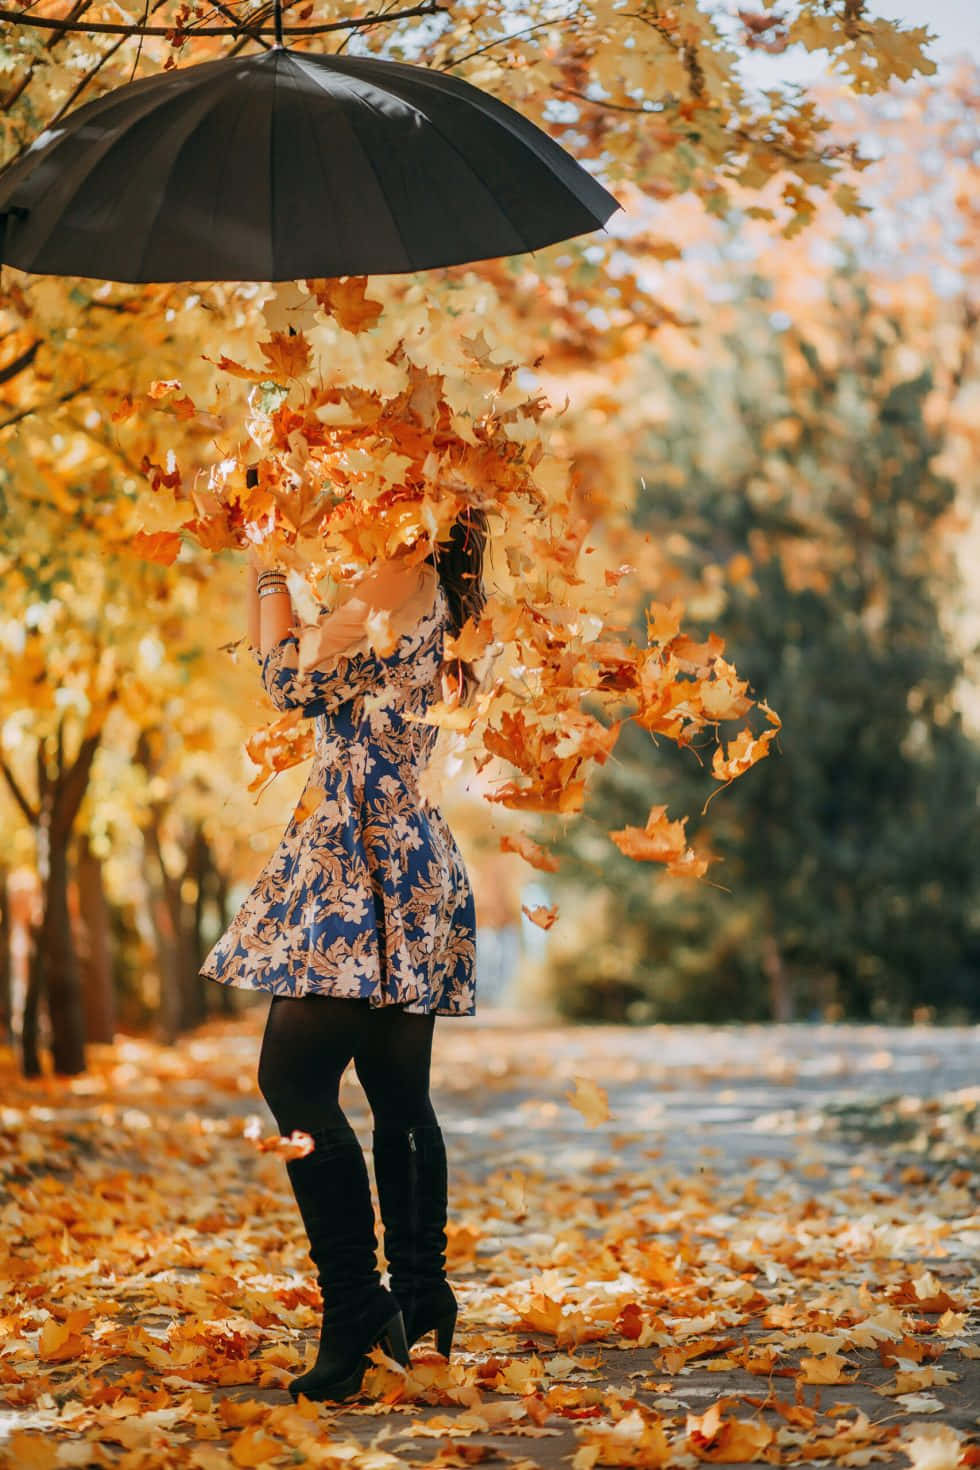 Download Enjoy Splendid Fall Foliage Outdoors | Wallpapers.com